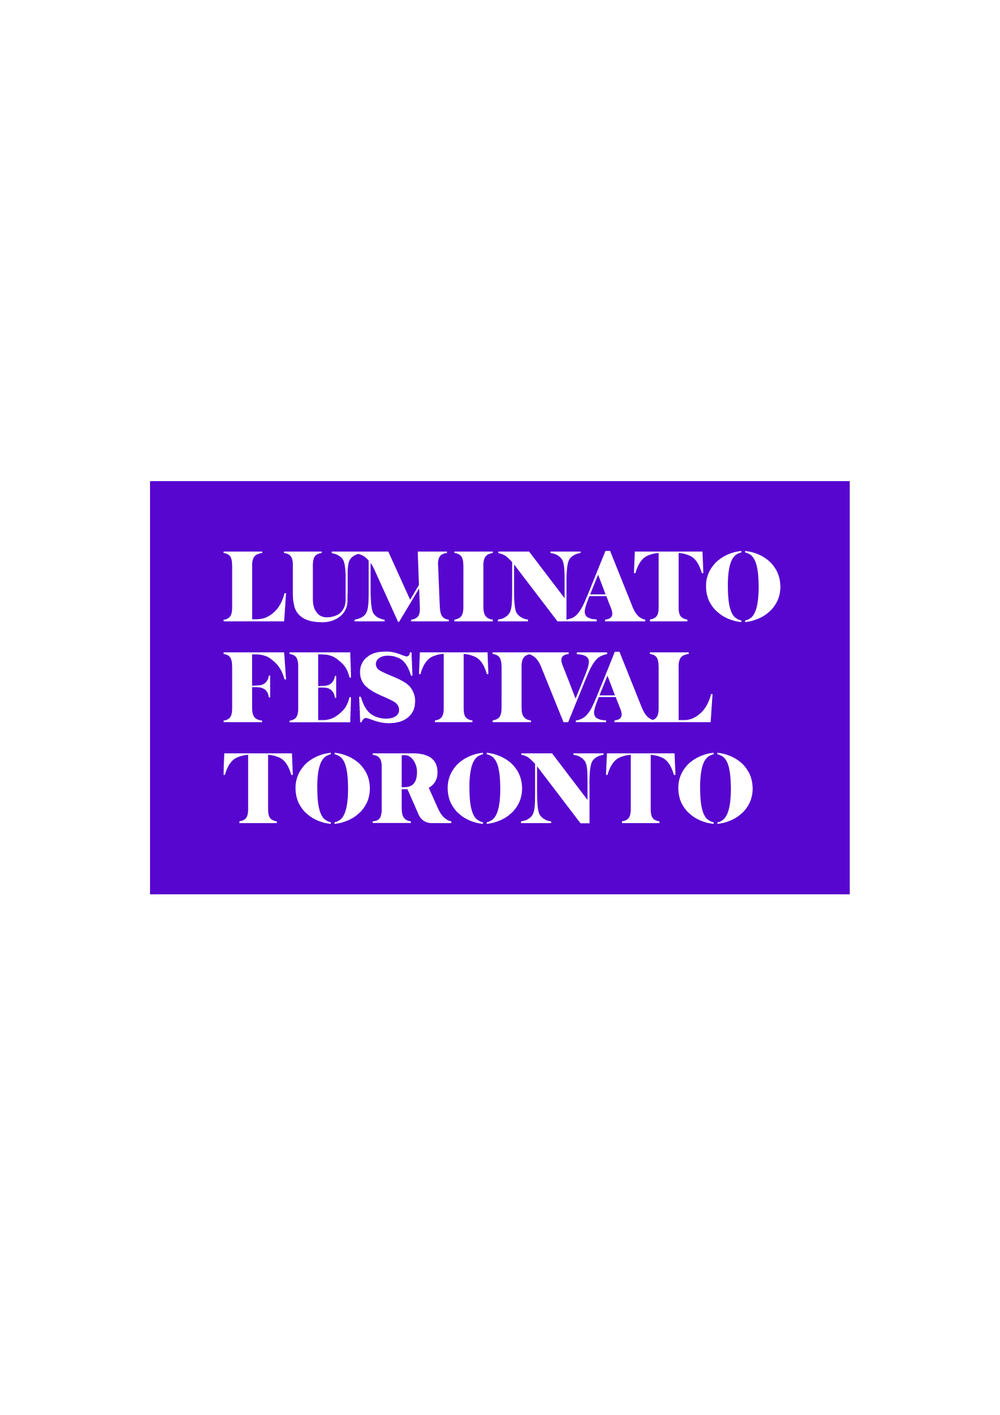 A bright purple background with white capital letters spelling "Luminato Festival Toronto".